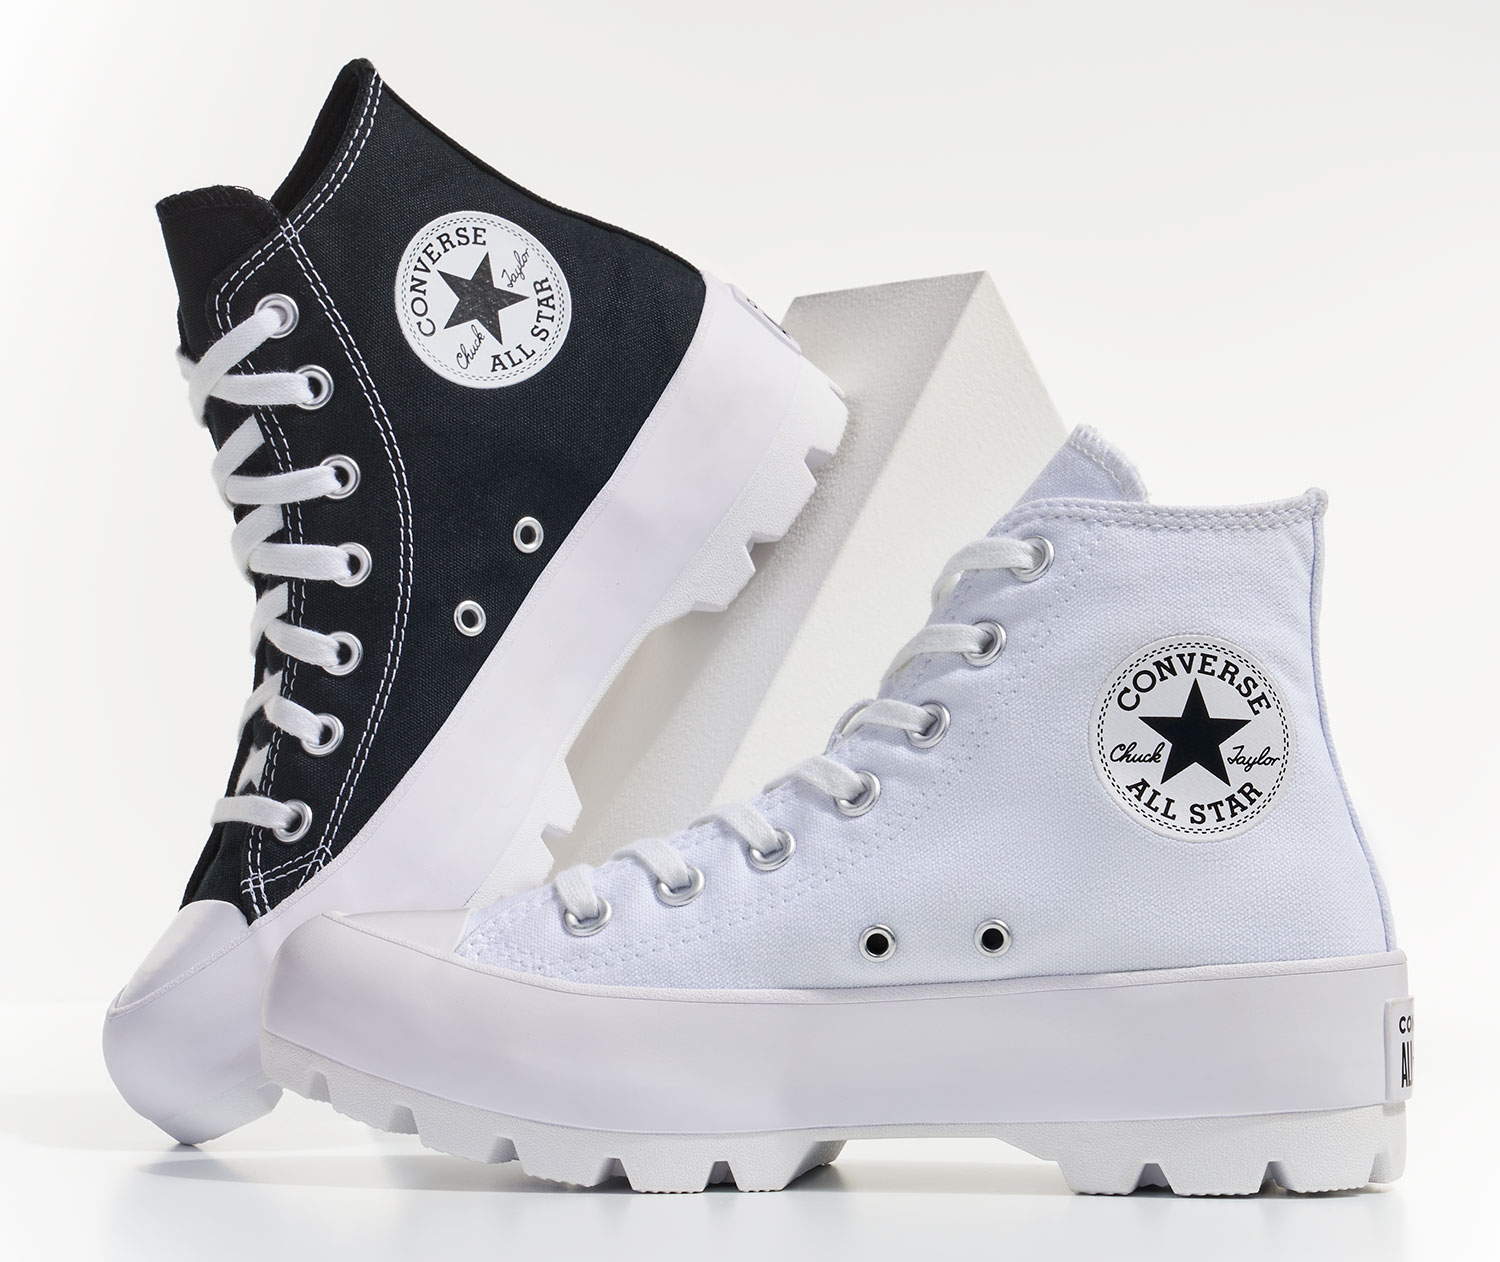 white converse boots